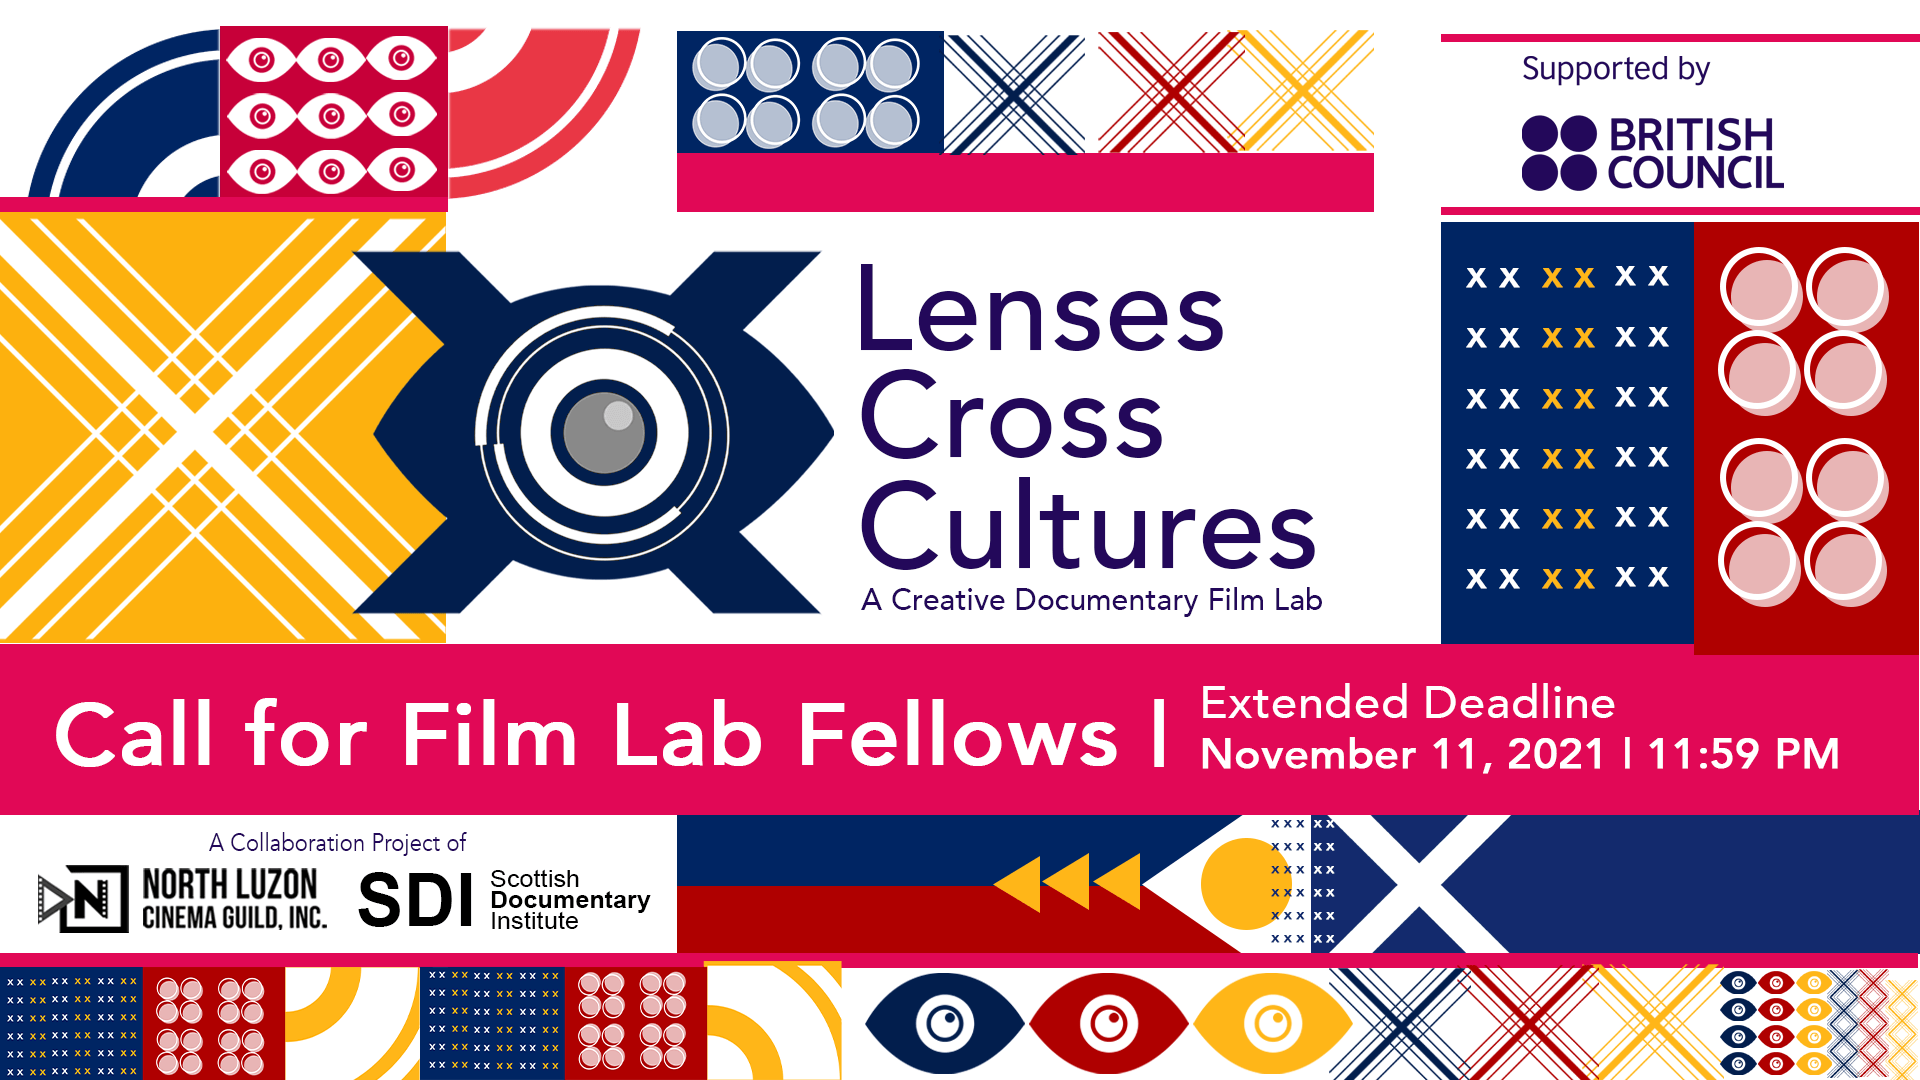 Call for fellows: Lenses Cross Cultures Creative Documentary Film Lab